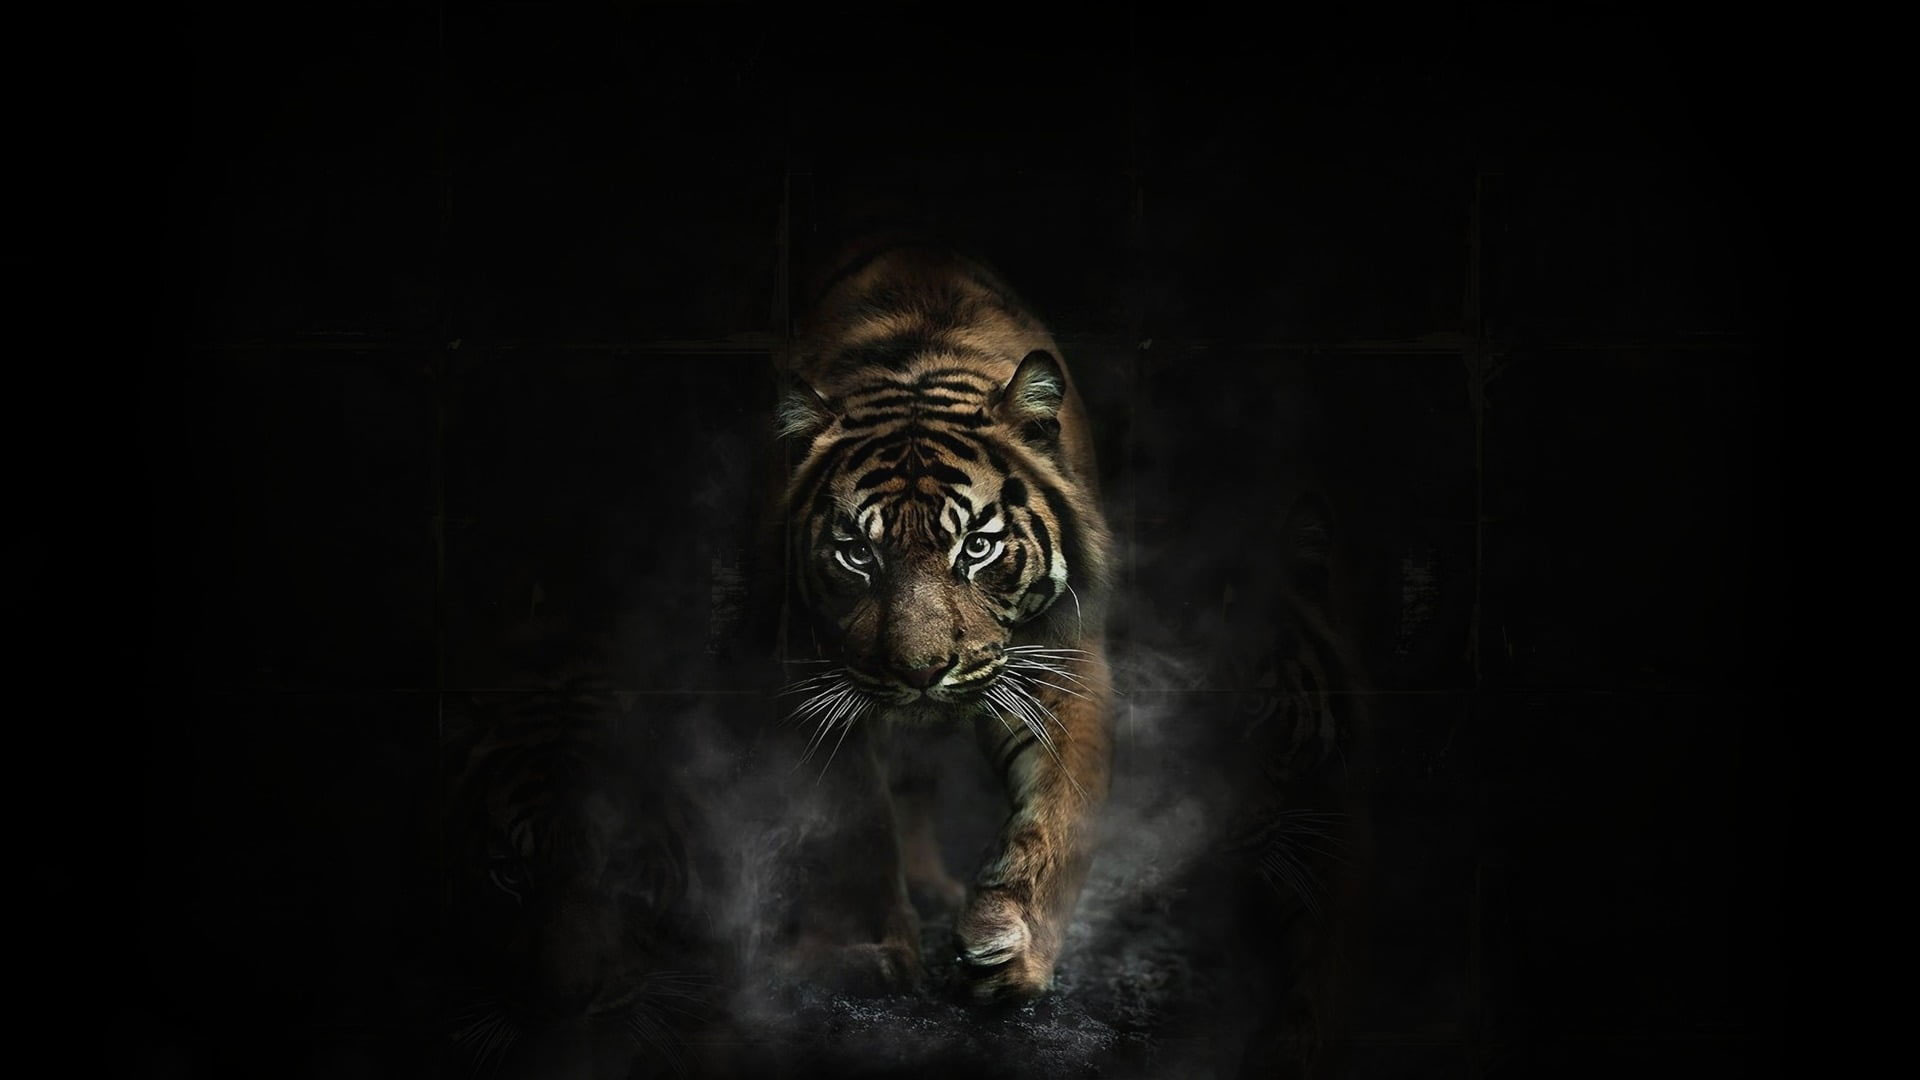 Adult brown tiger wallpaper, animals, dark, artwork, animal themes, one animal